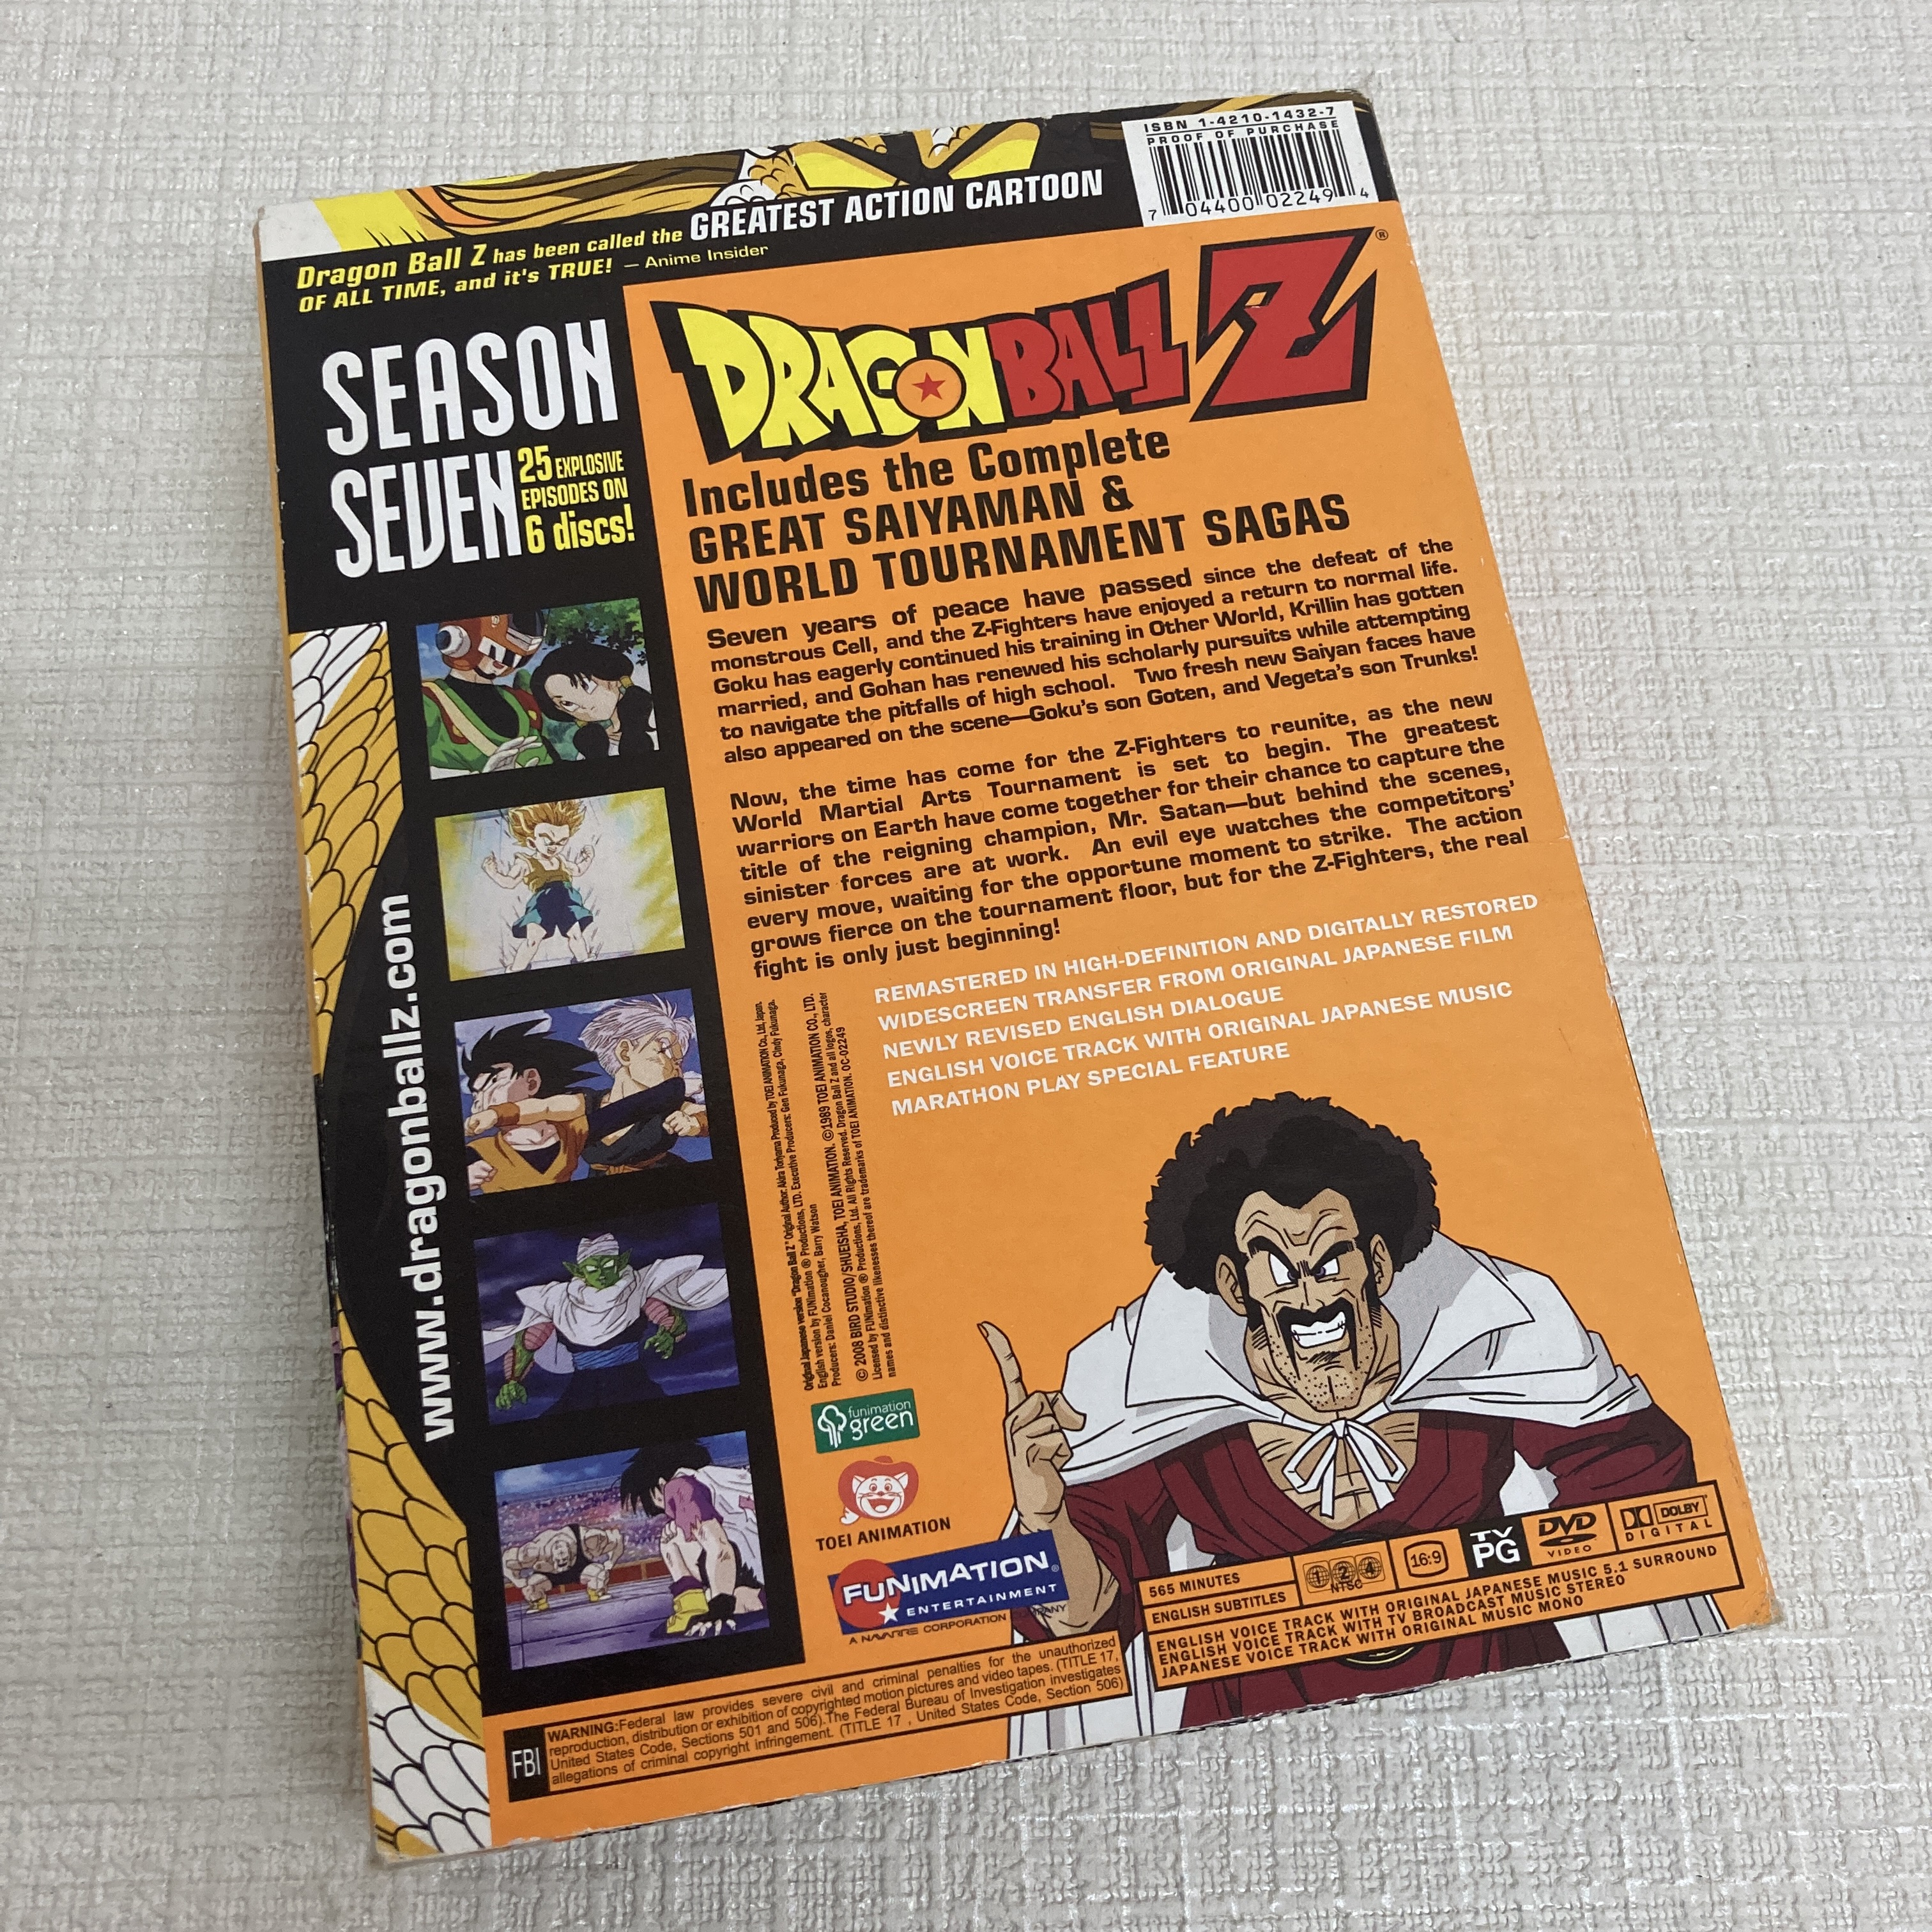 Buy Dragon Ball Z Season 9 DVD 6Disc DIGITAL REMASTERED Toei